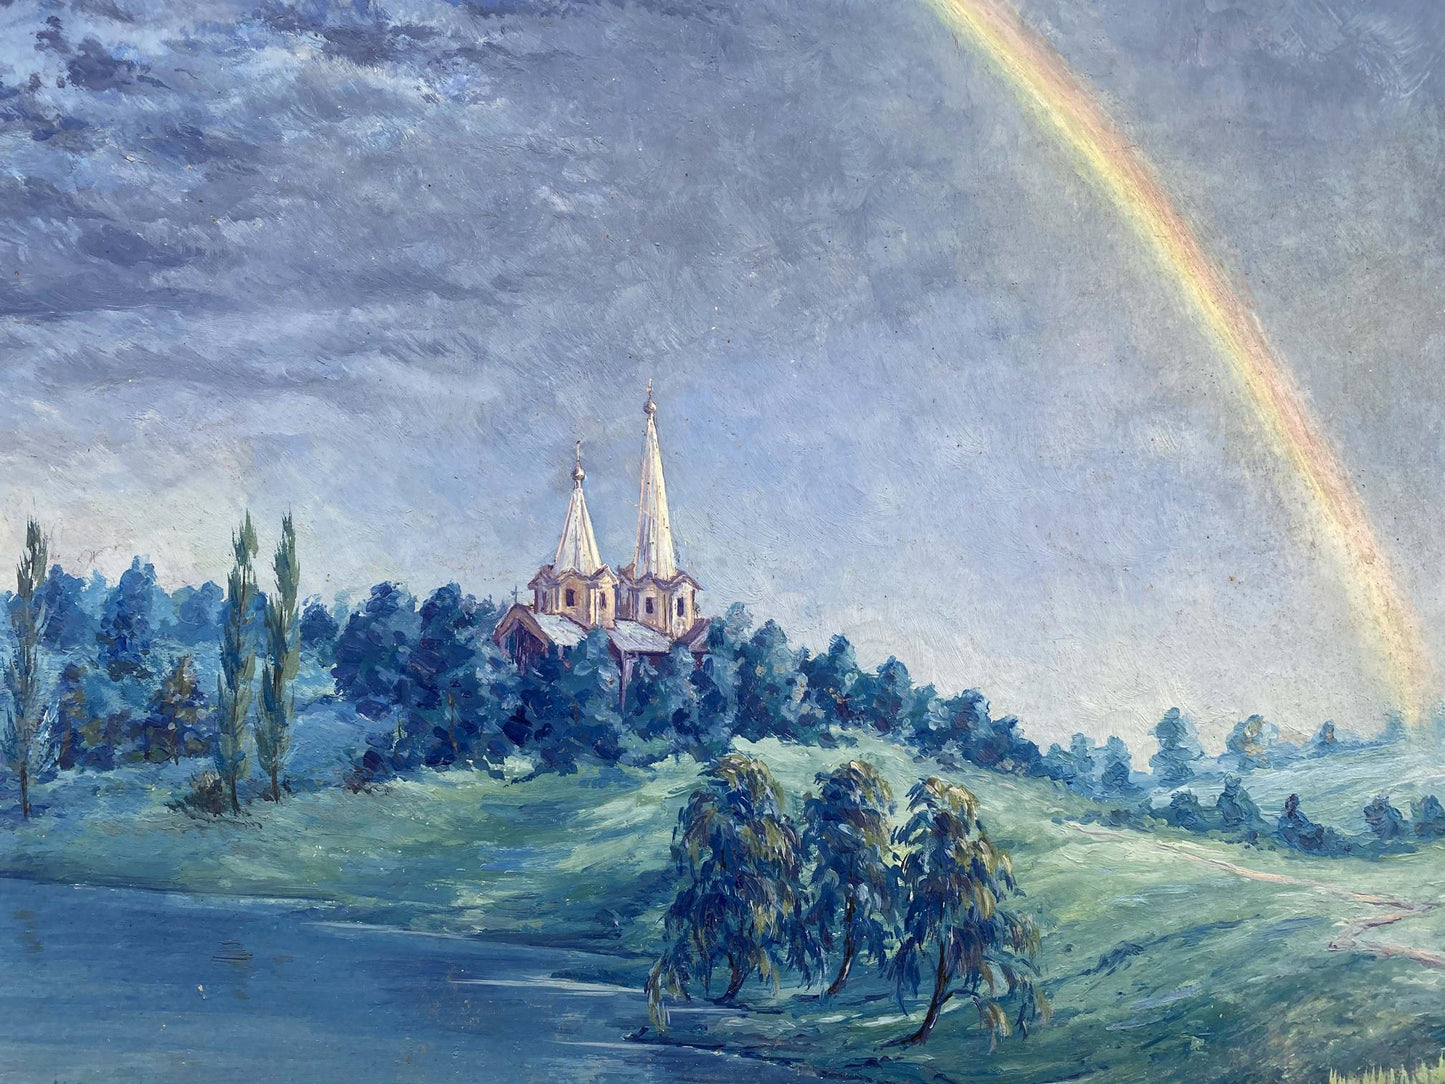 In Alexander Vladimirovich Lesik's oil artwork, a rainbow arches over the church